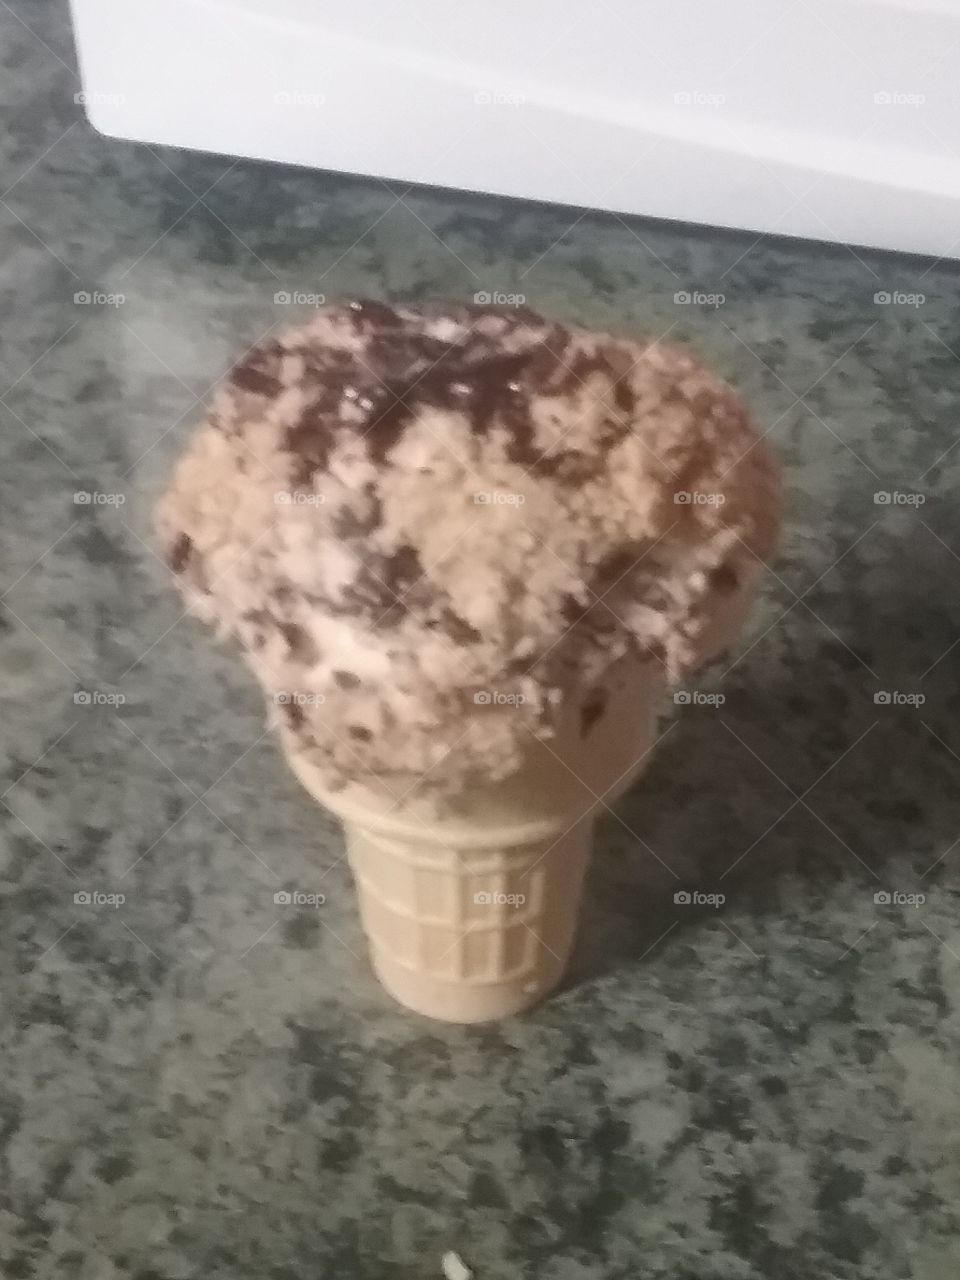 My Yummy Ice cream Creation